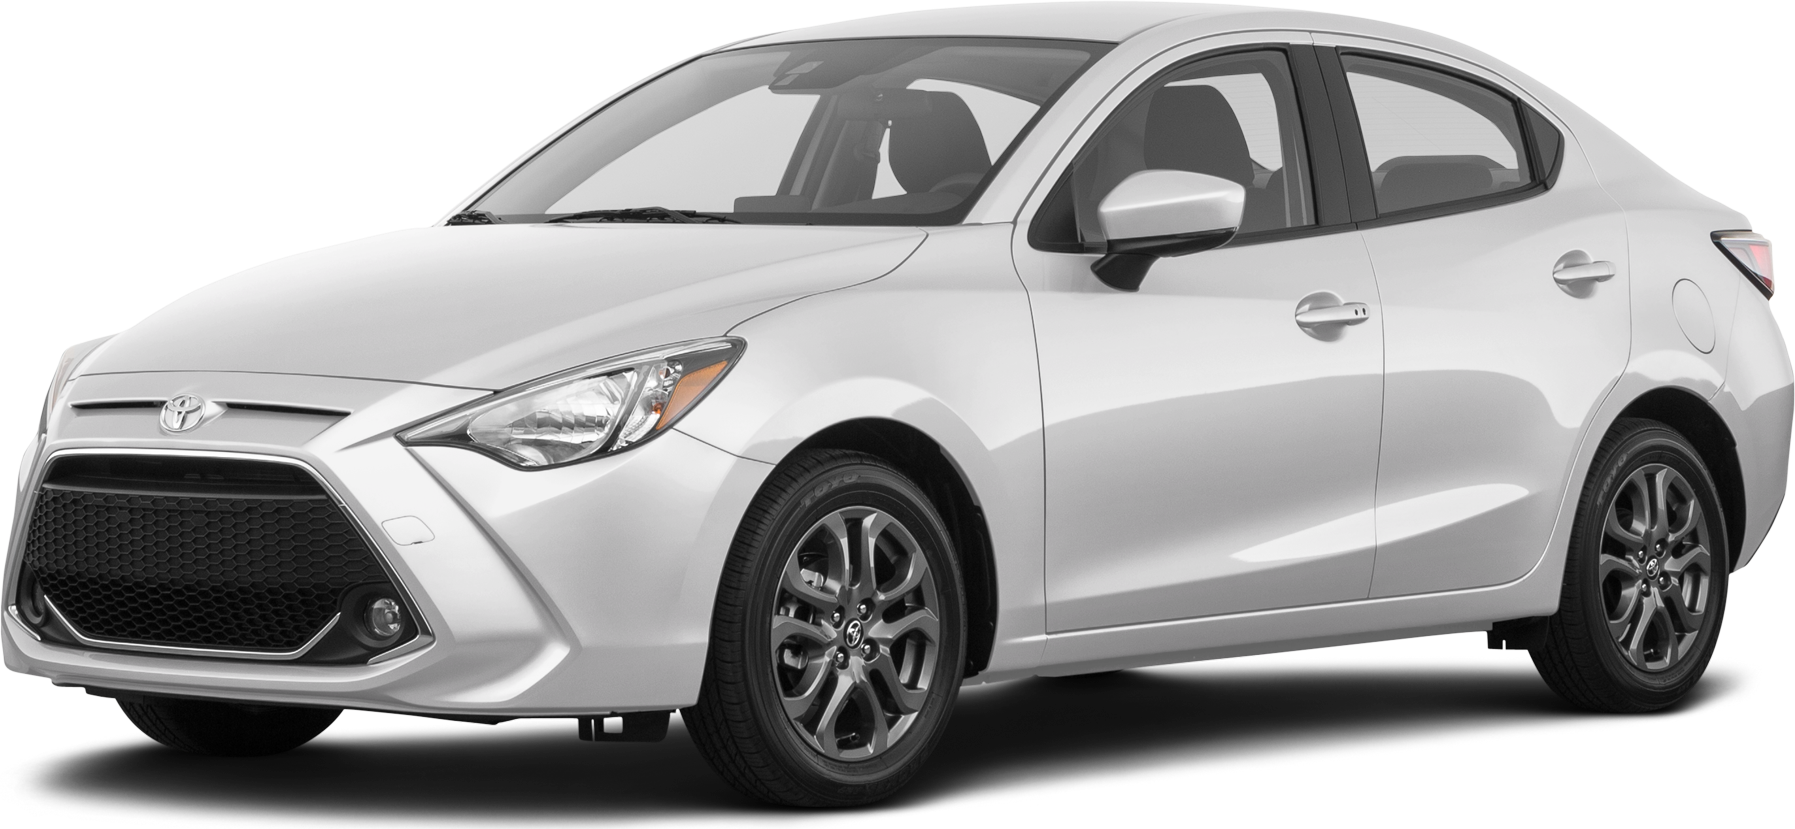 2020 Toyota Yaris Price, Value, Ratings & Reviews